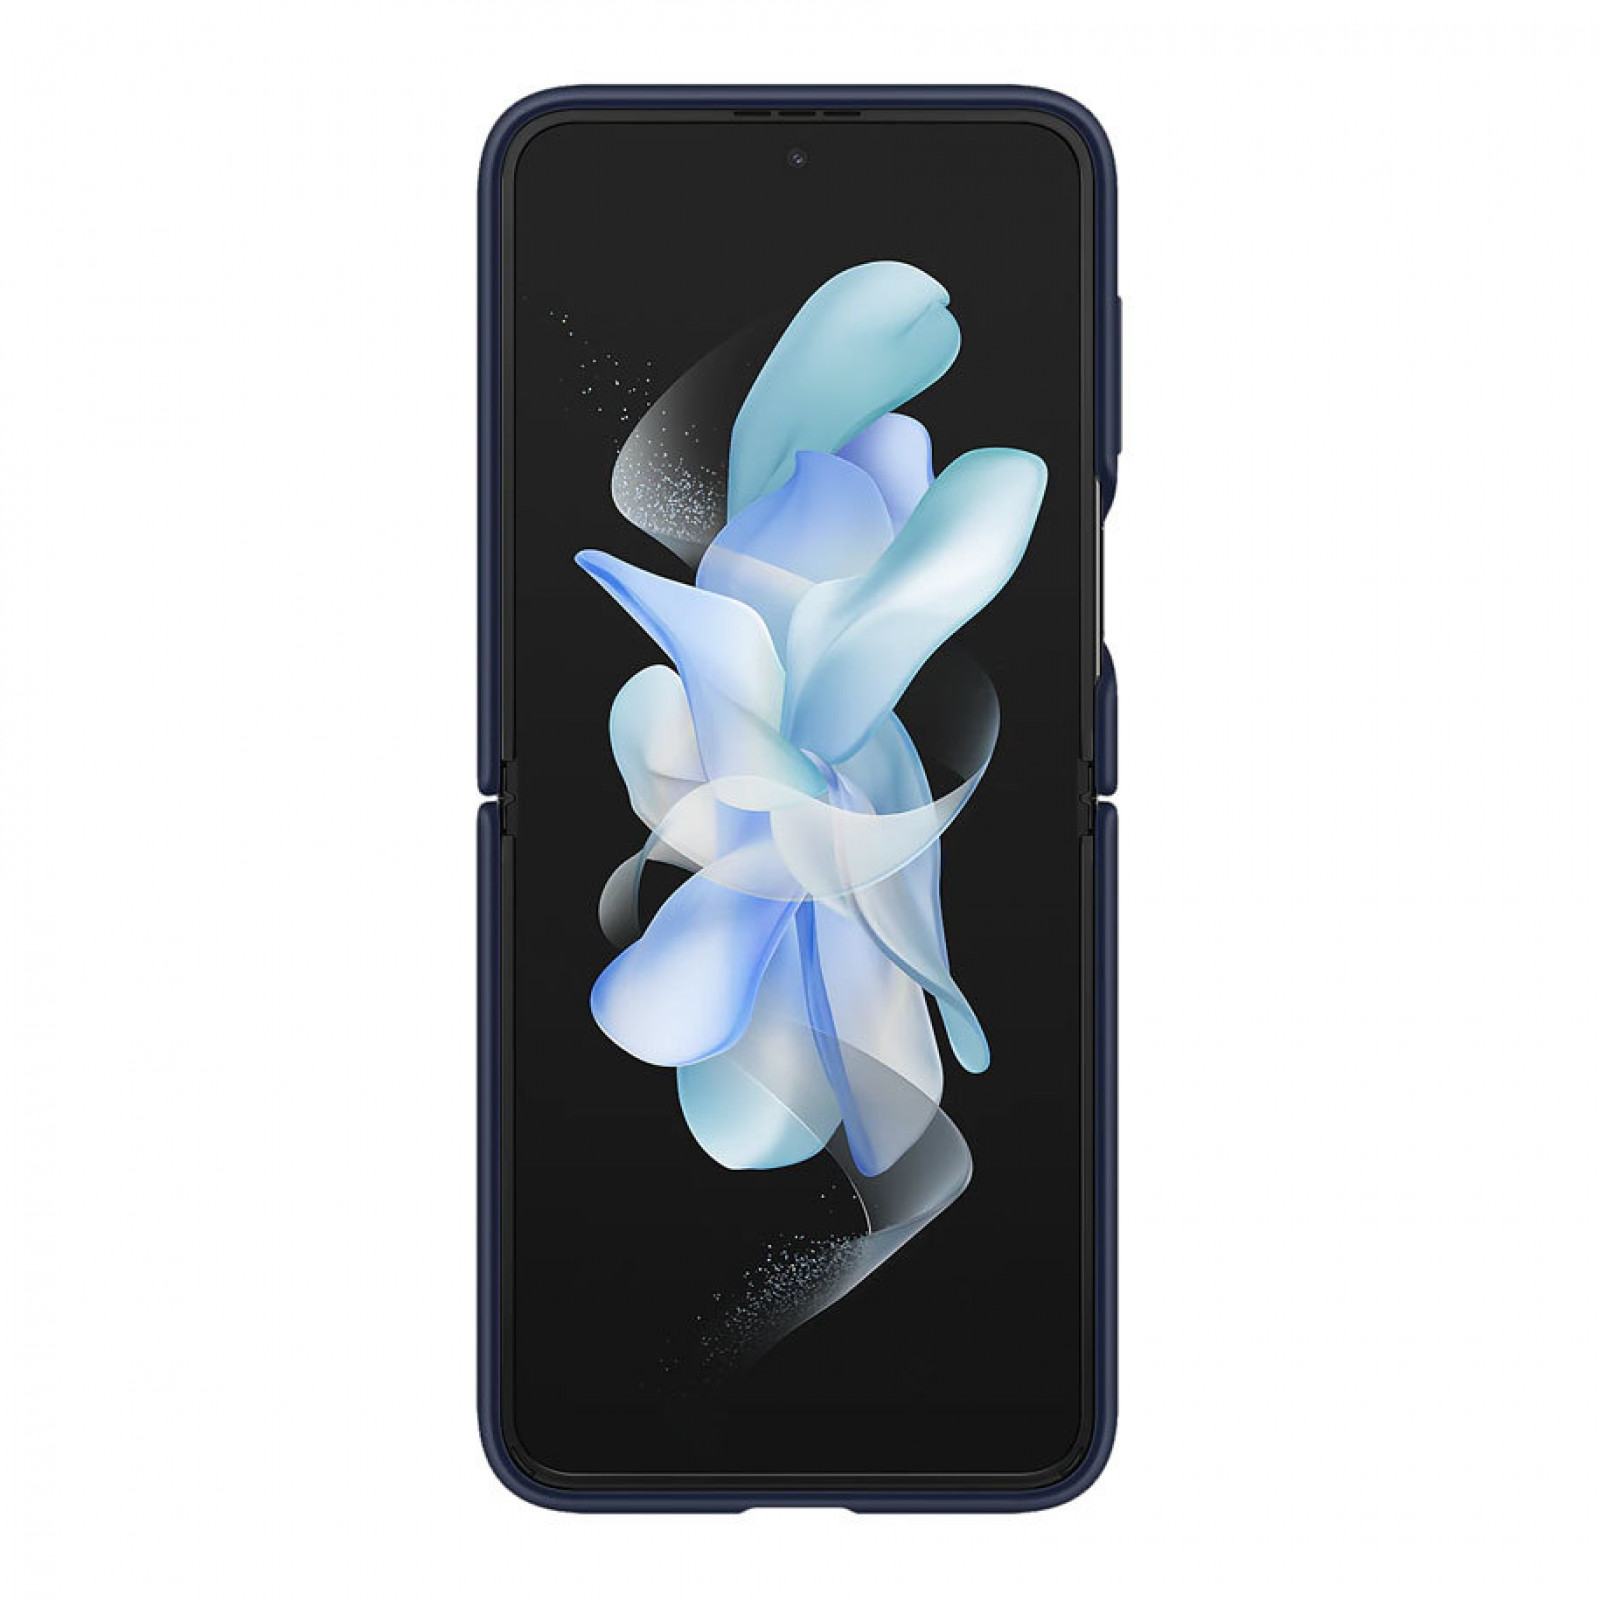 Оригинален гръб Samsung Silicone Cover за Samsung  Galaxy Z Flip 4 - Син, EF-PF721TNE